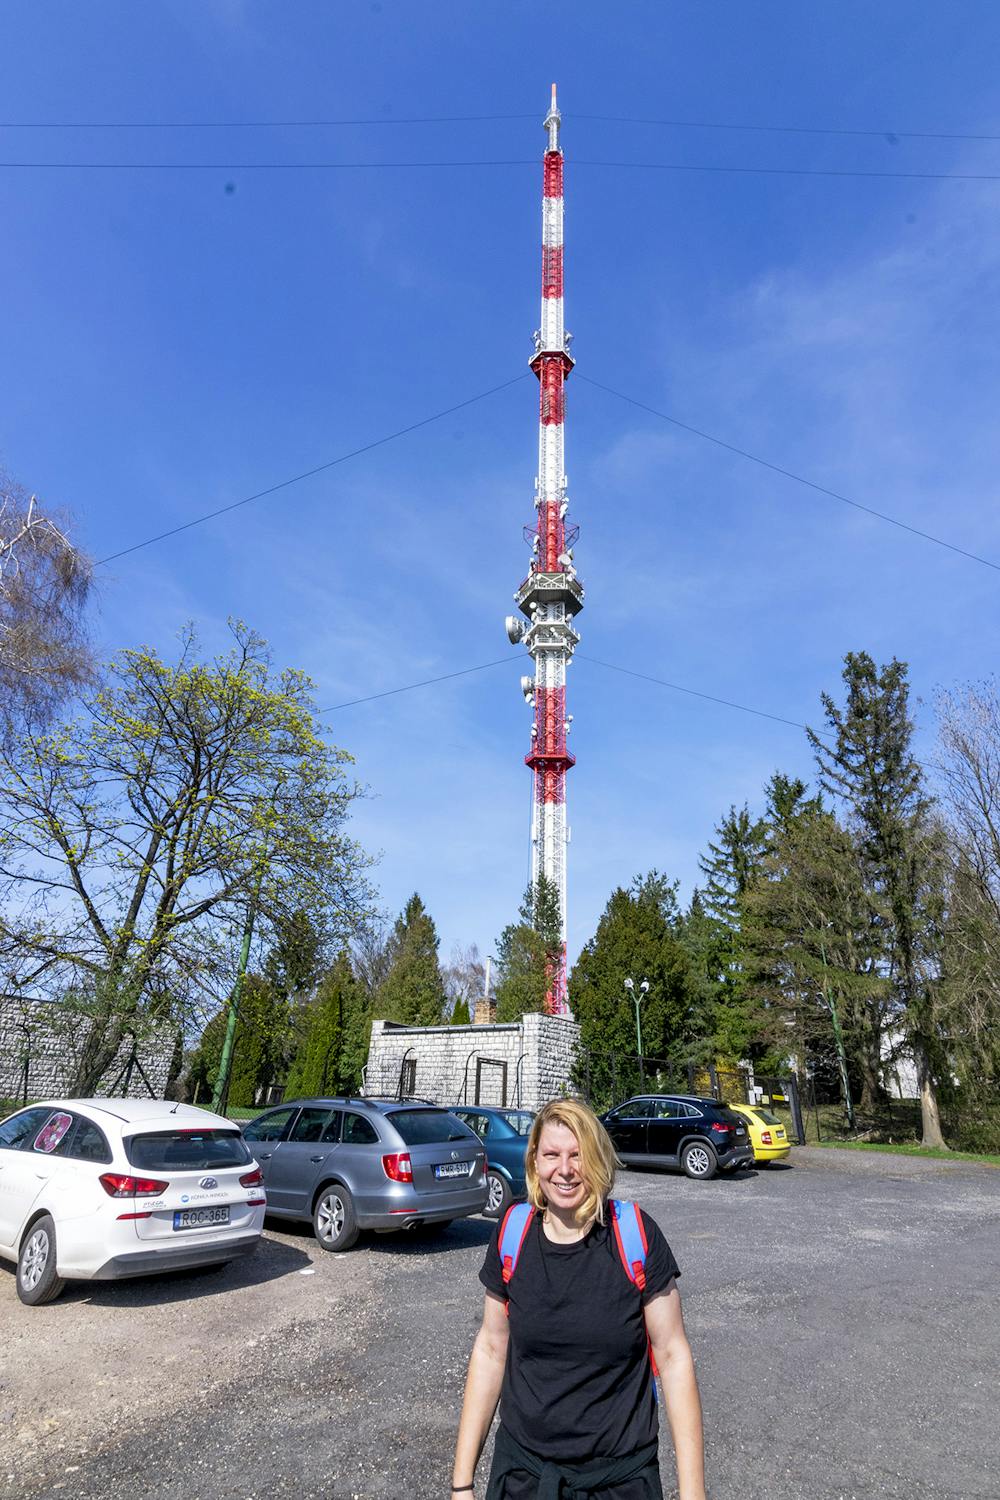 Kab-hegy, URH-TV torony (238m)